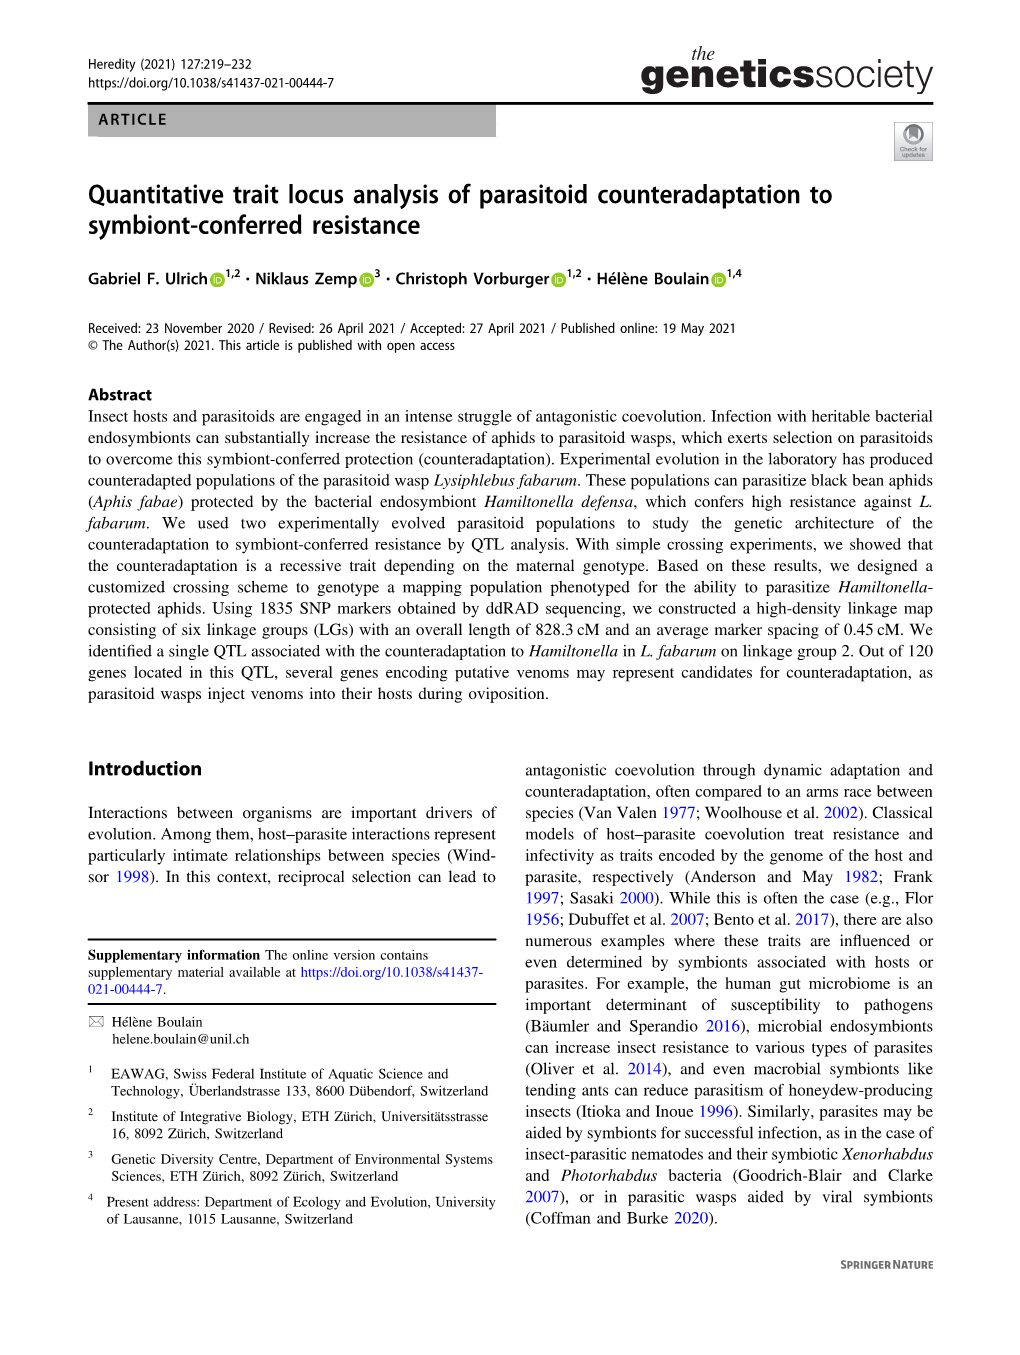 Quantitative Trait Locus Analysis of Parasitoid Counteradaptation to Symbiont-Conferred Resistance